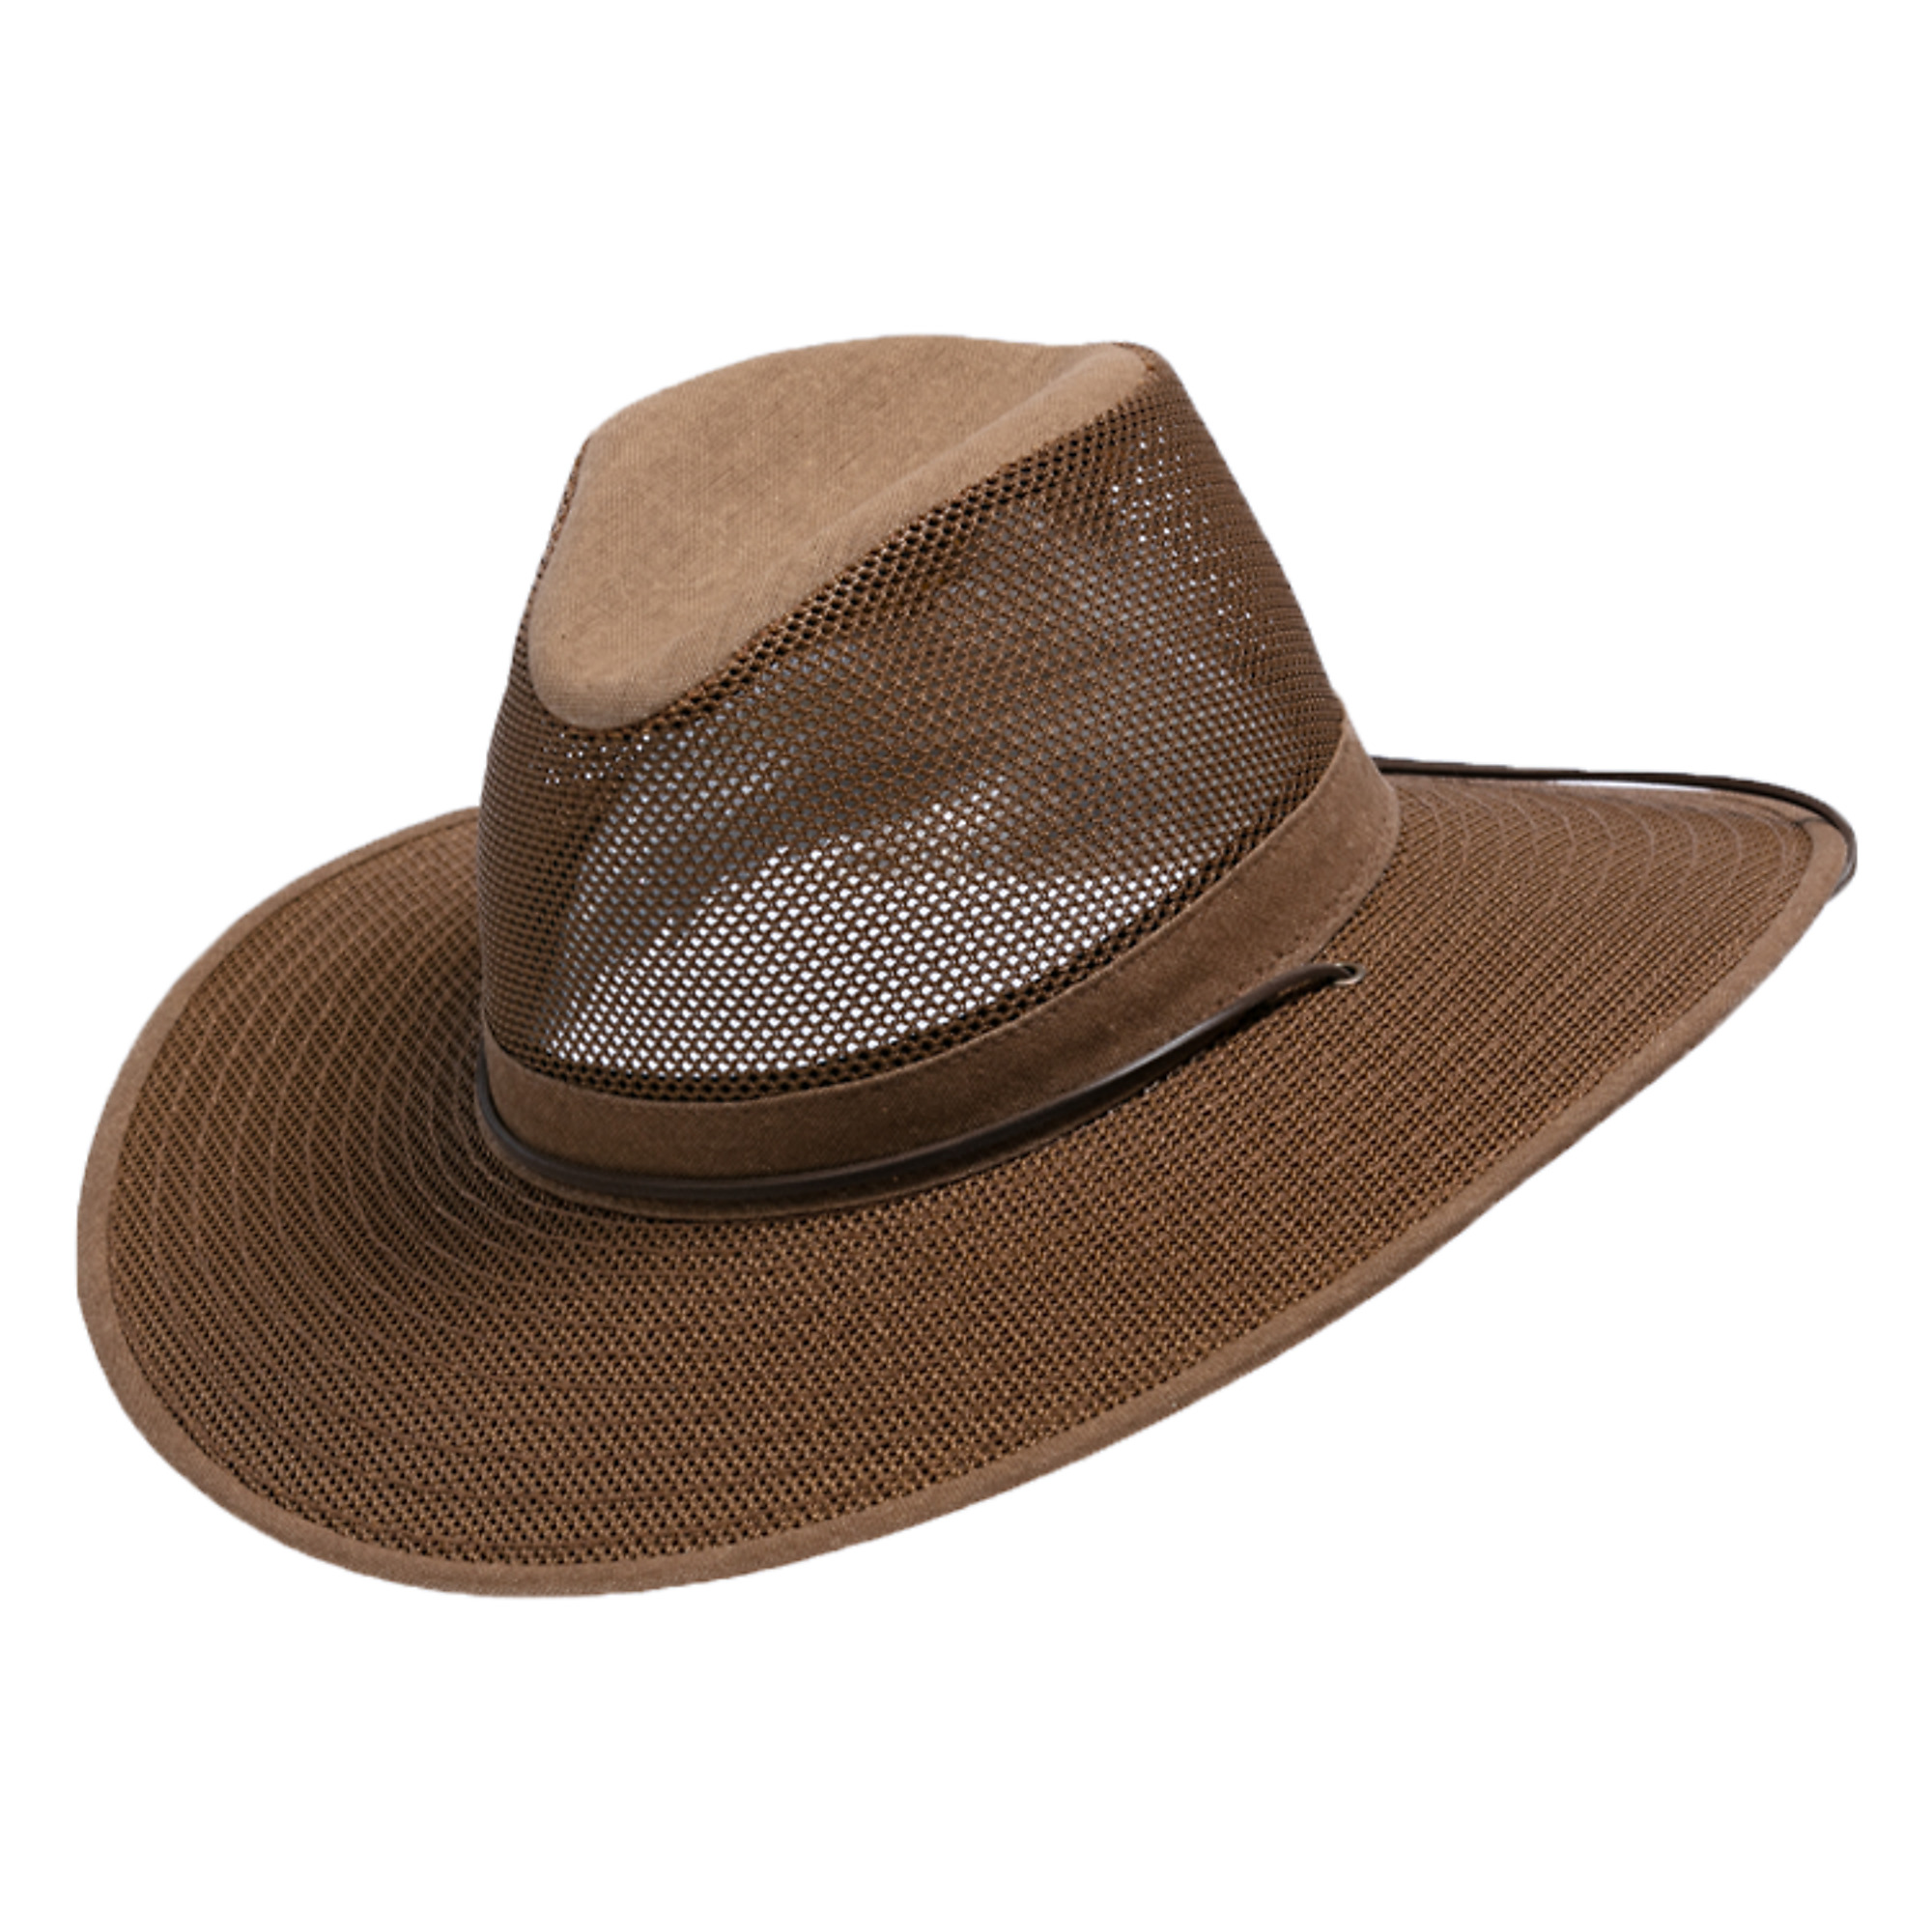 Henschel Hat Company, Earth Aussie Breezer Grande, Size S, Color Earth, Hat Style Hat, Model 5301-82S